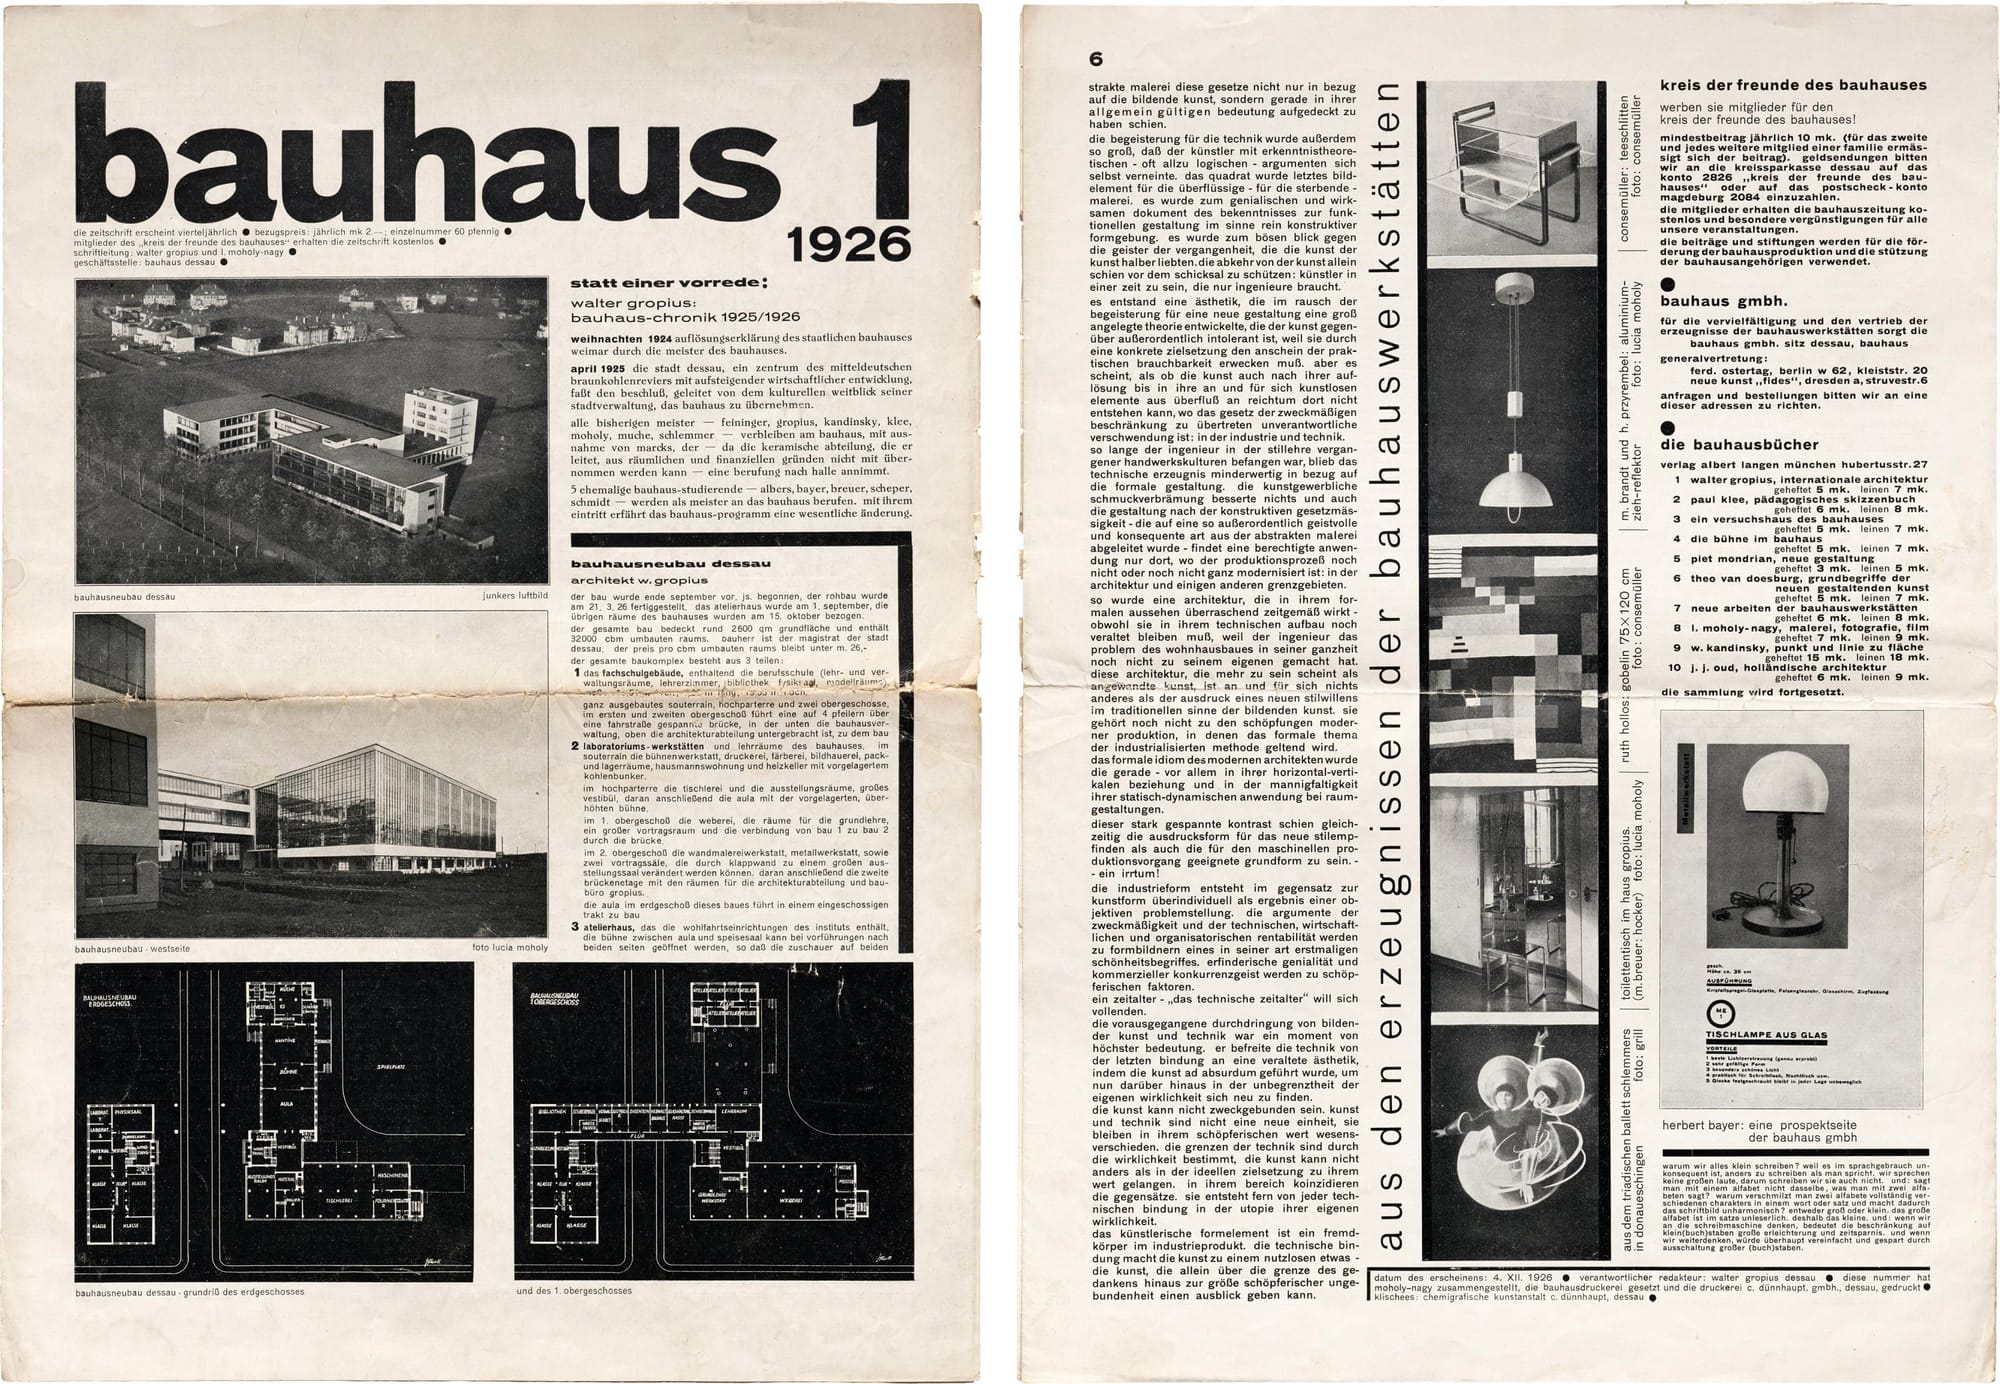 Bauhaus magazine layout.